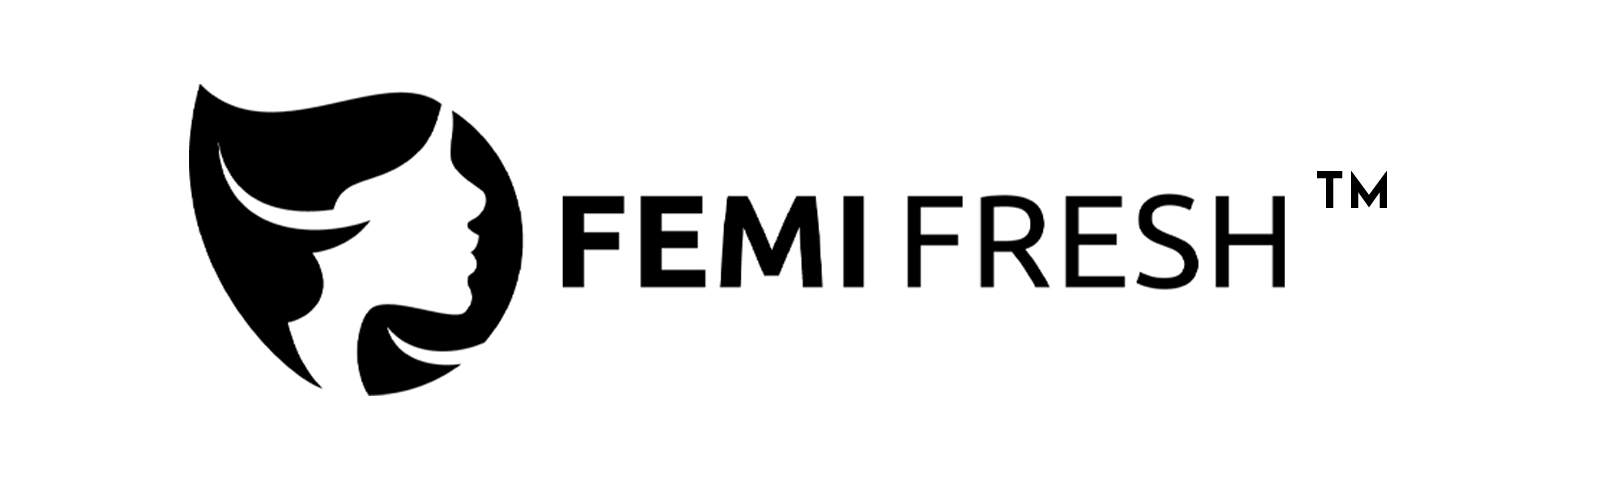 Logo-Black-3.png